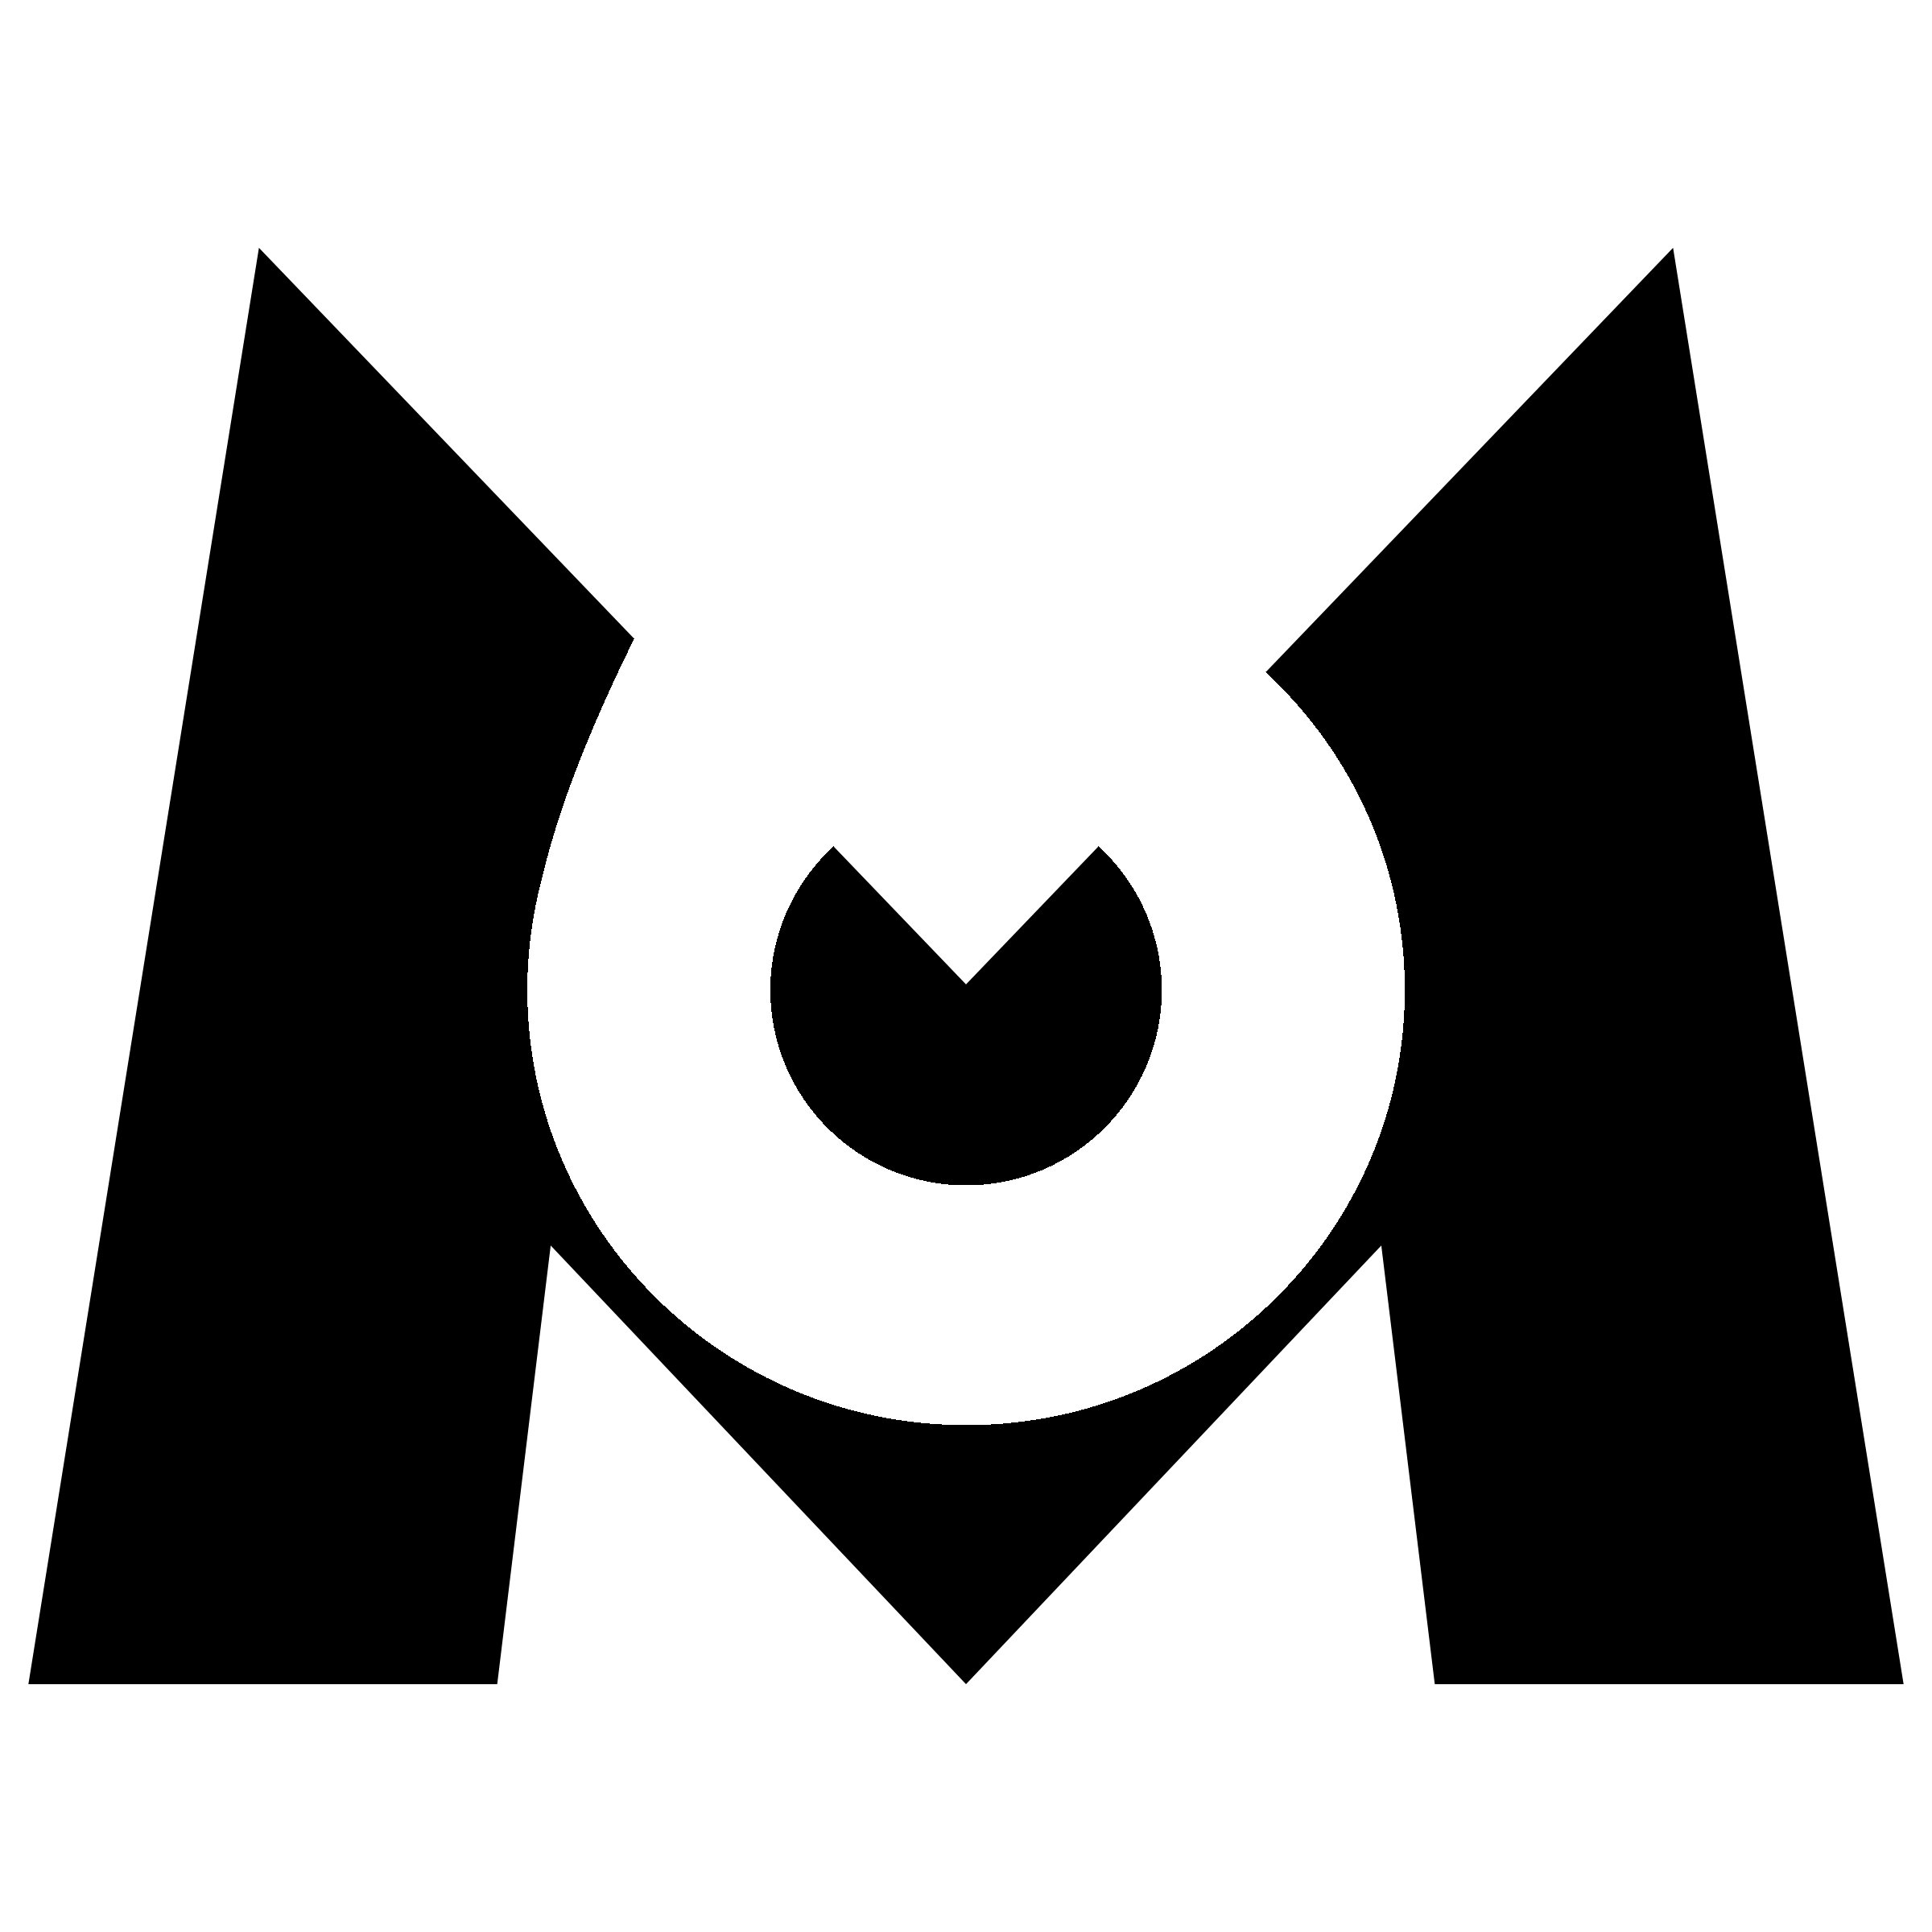 M6 Logo - M6 TV Logo PNG Transparent & SVG Vector - Freebie Supply